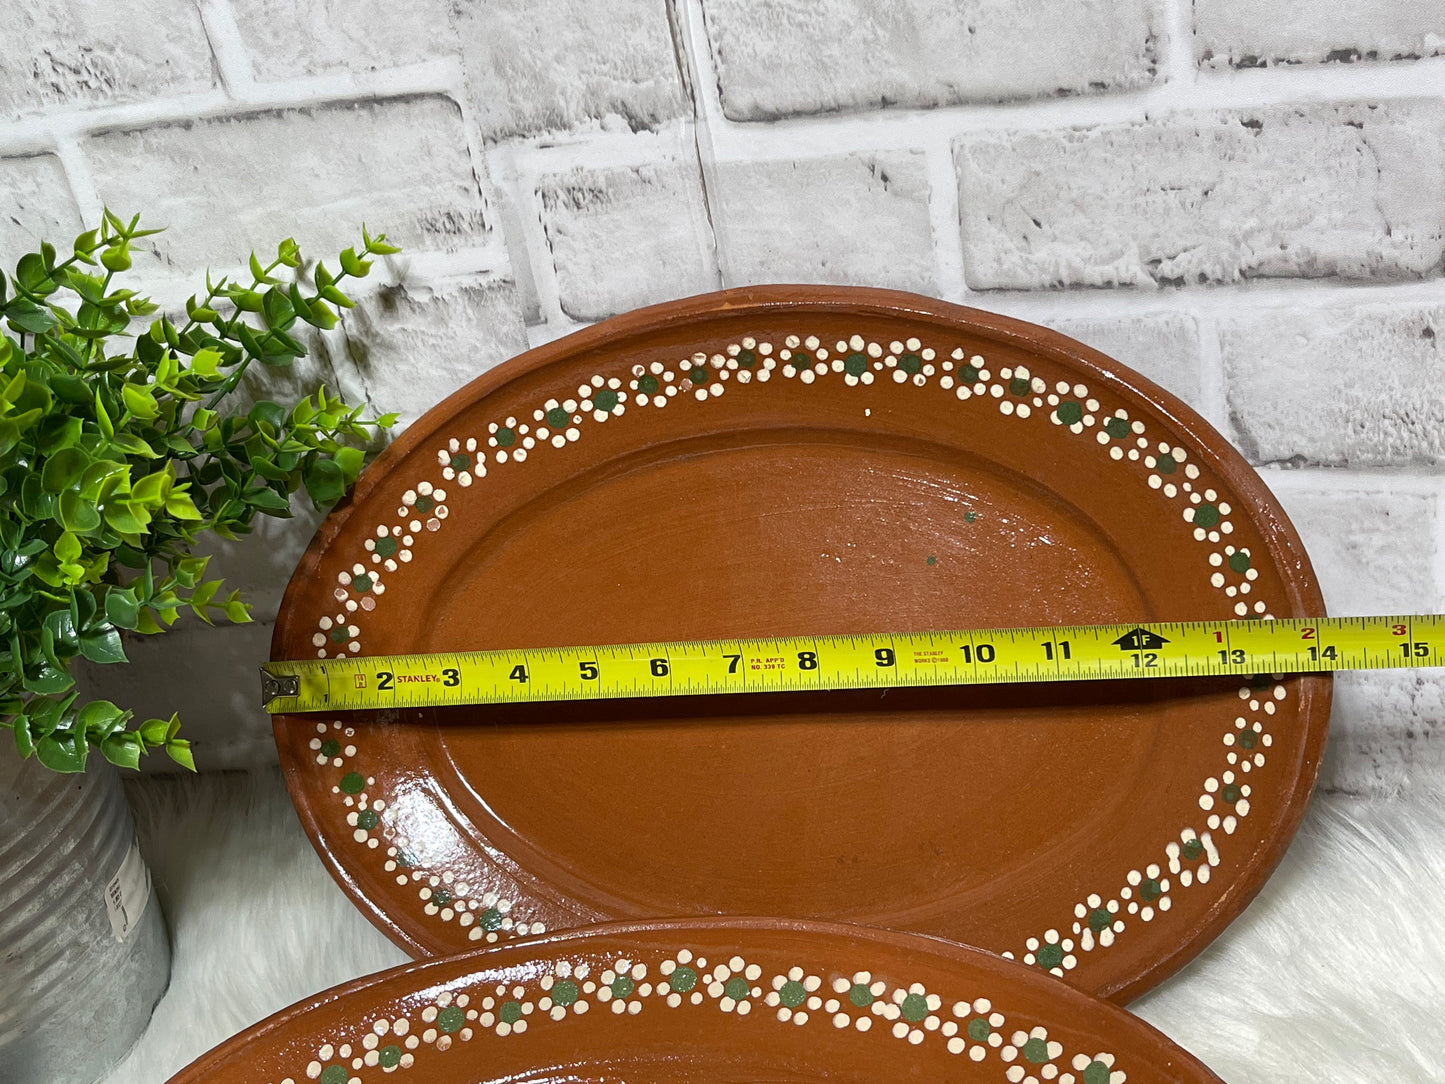 Handmade rustic 14” oval flat plate/ plato/charola de barro ovalado